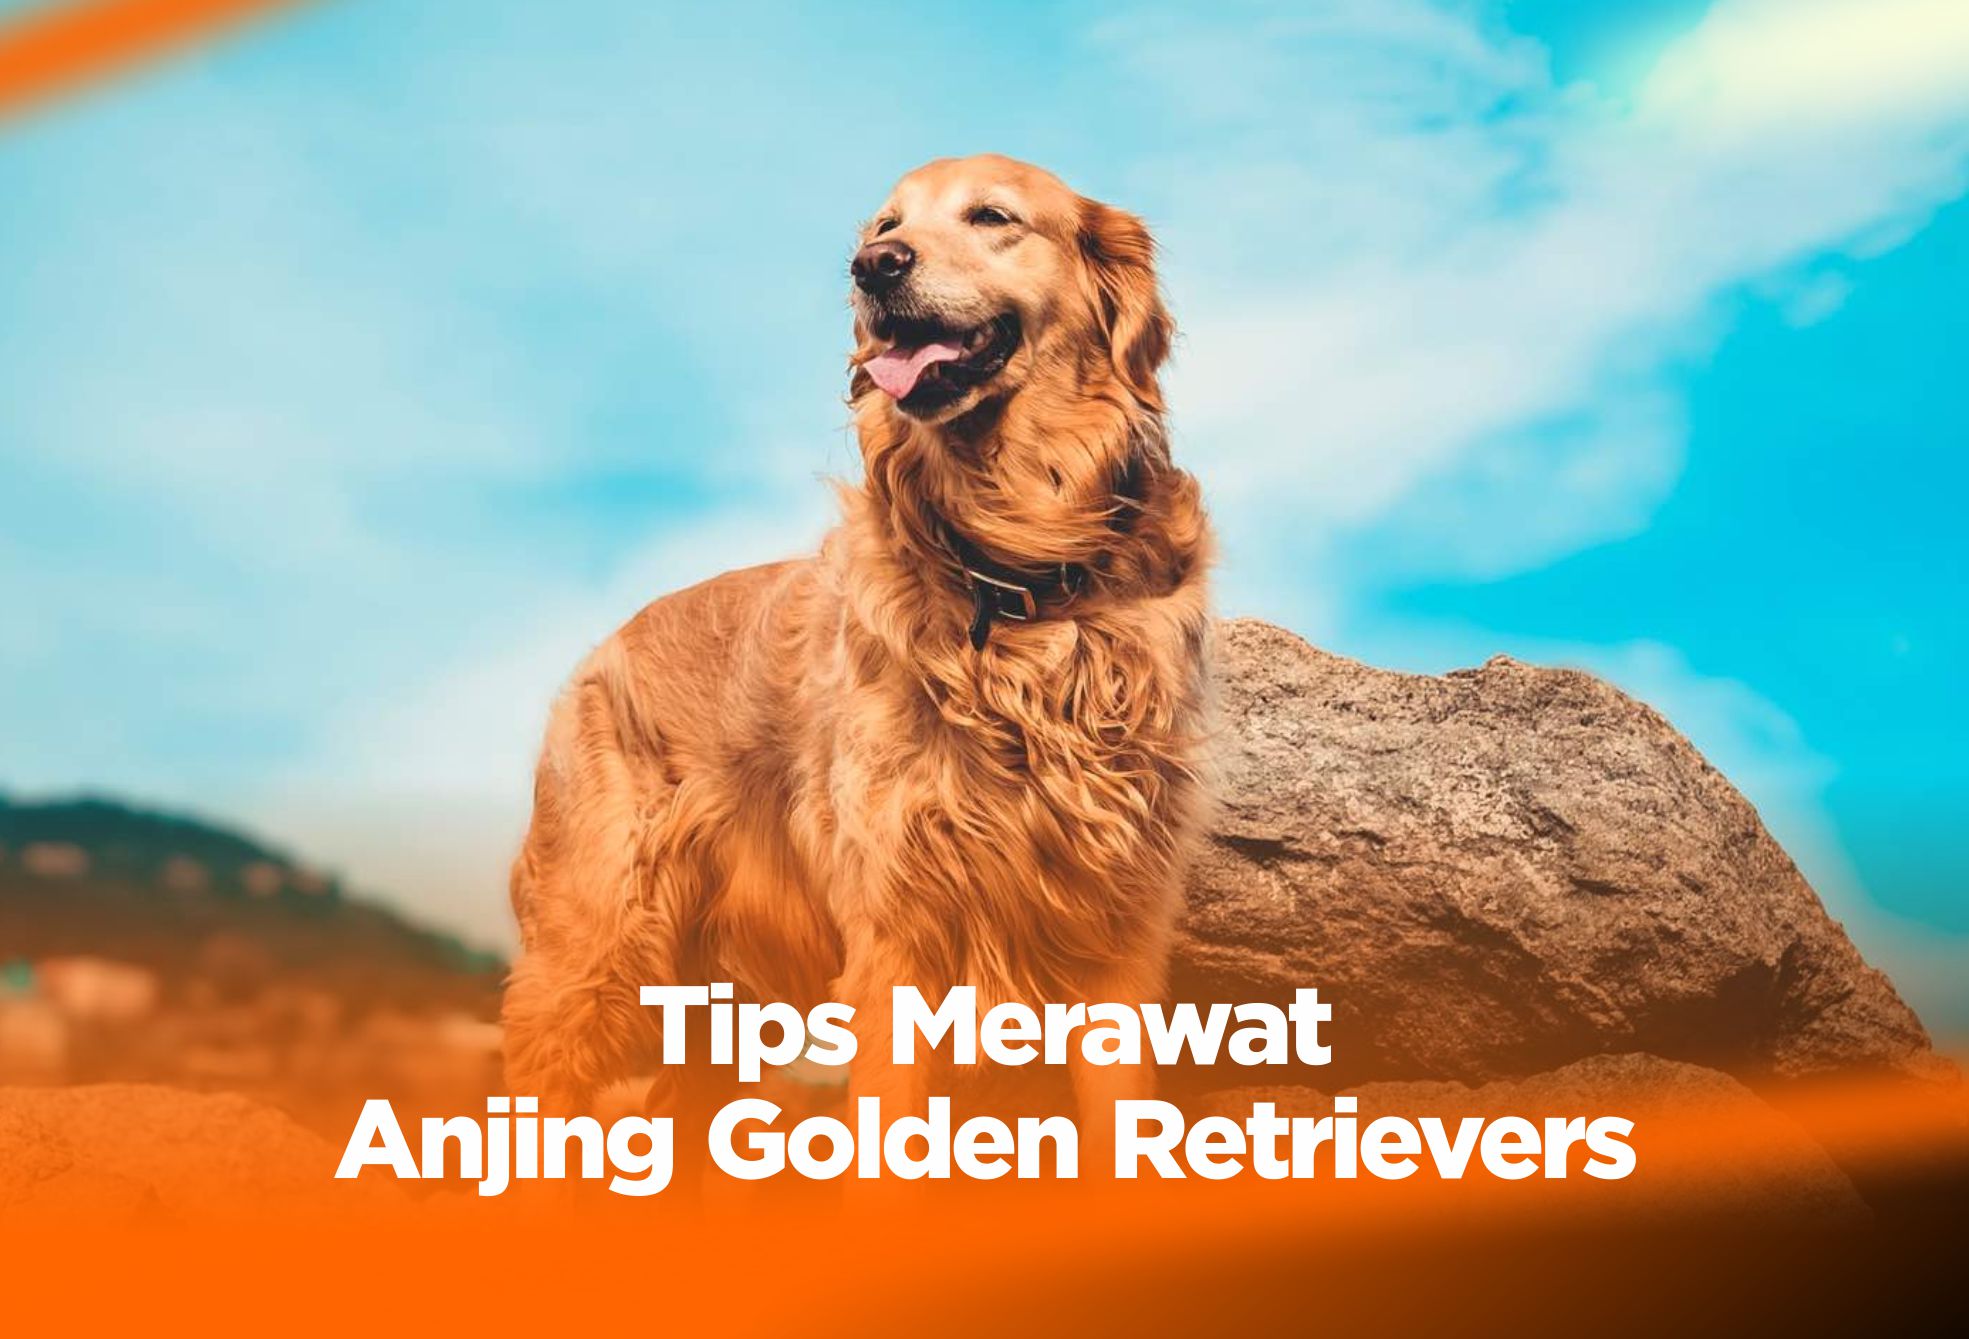 Tips Merawat Anjing Golden Retrievers